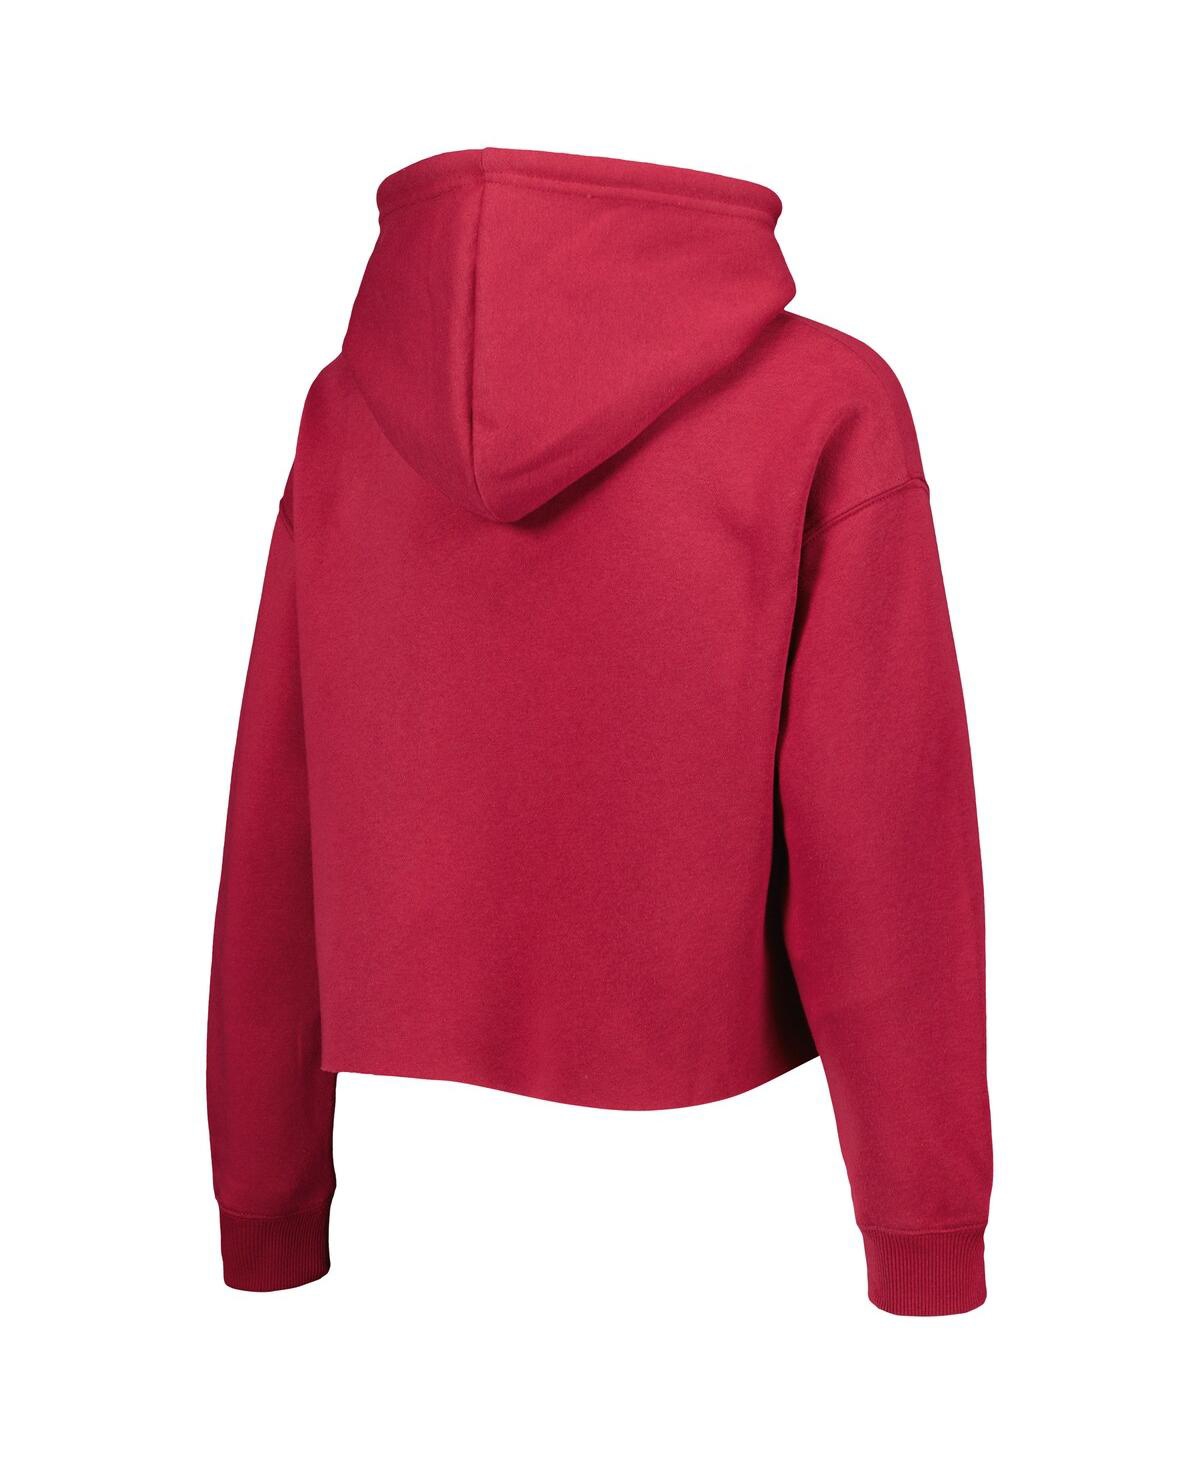 Shop Cuce Women's  Cardinal Arizona Cardinals Crystal Logo Cropped Pullover Hoodie